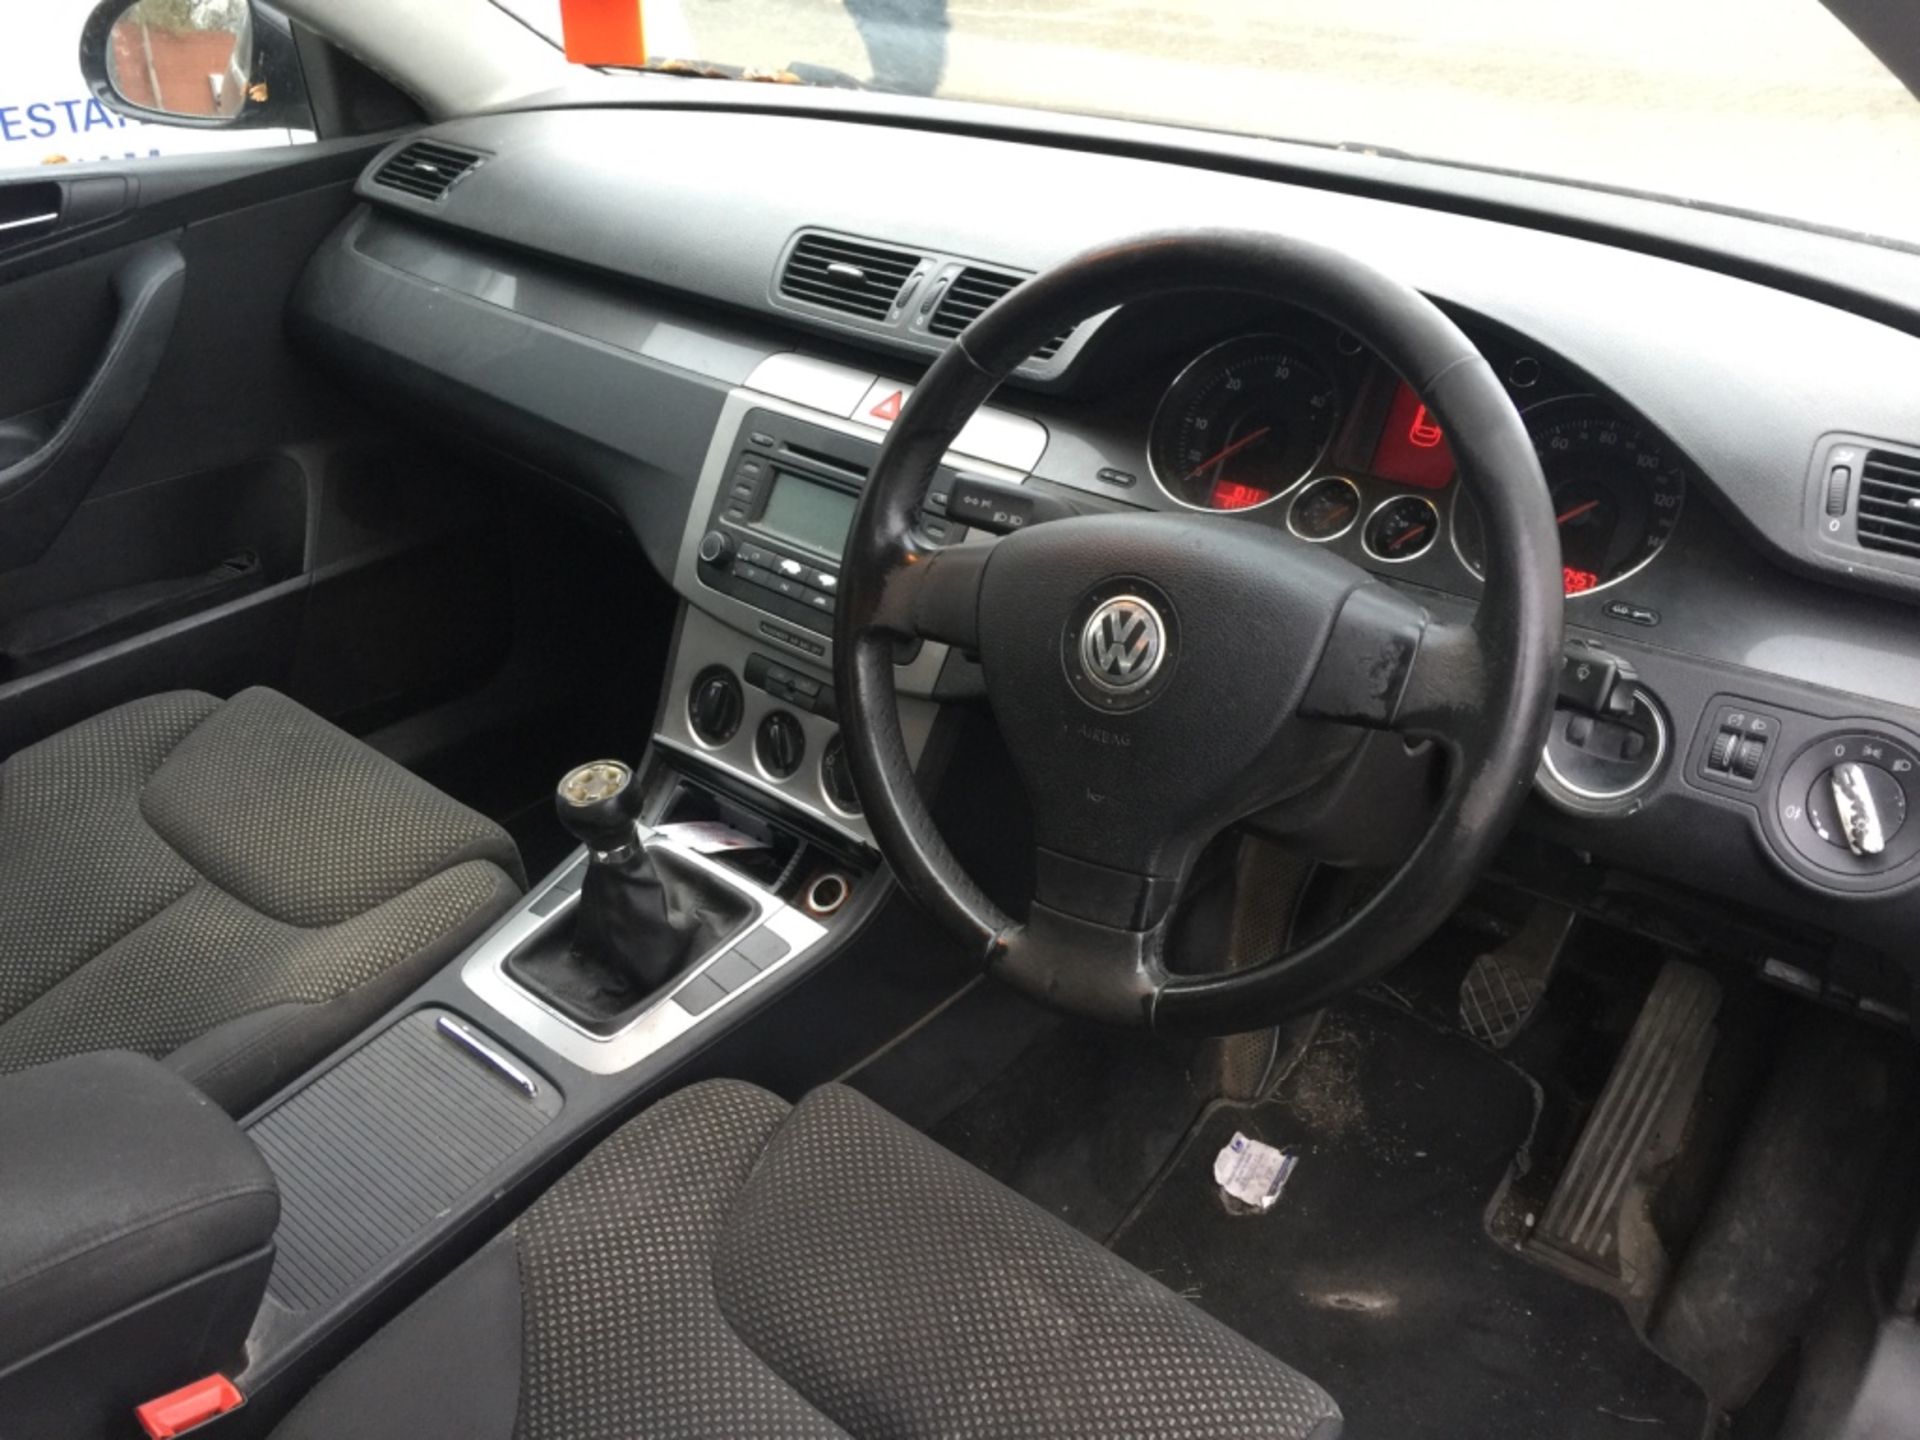 VW Passat SE TDI 105 1,896cc Dieel 4 Door Saloon, 5 Speed Manual Gearbox, Registration No. OE05 - Bild 12 aus 12